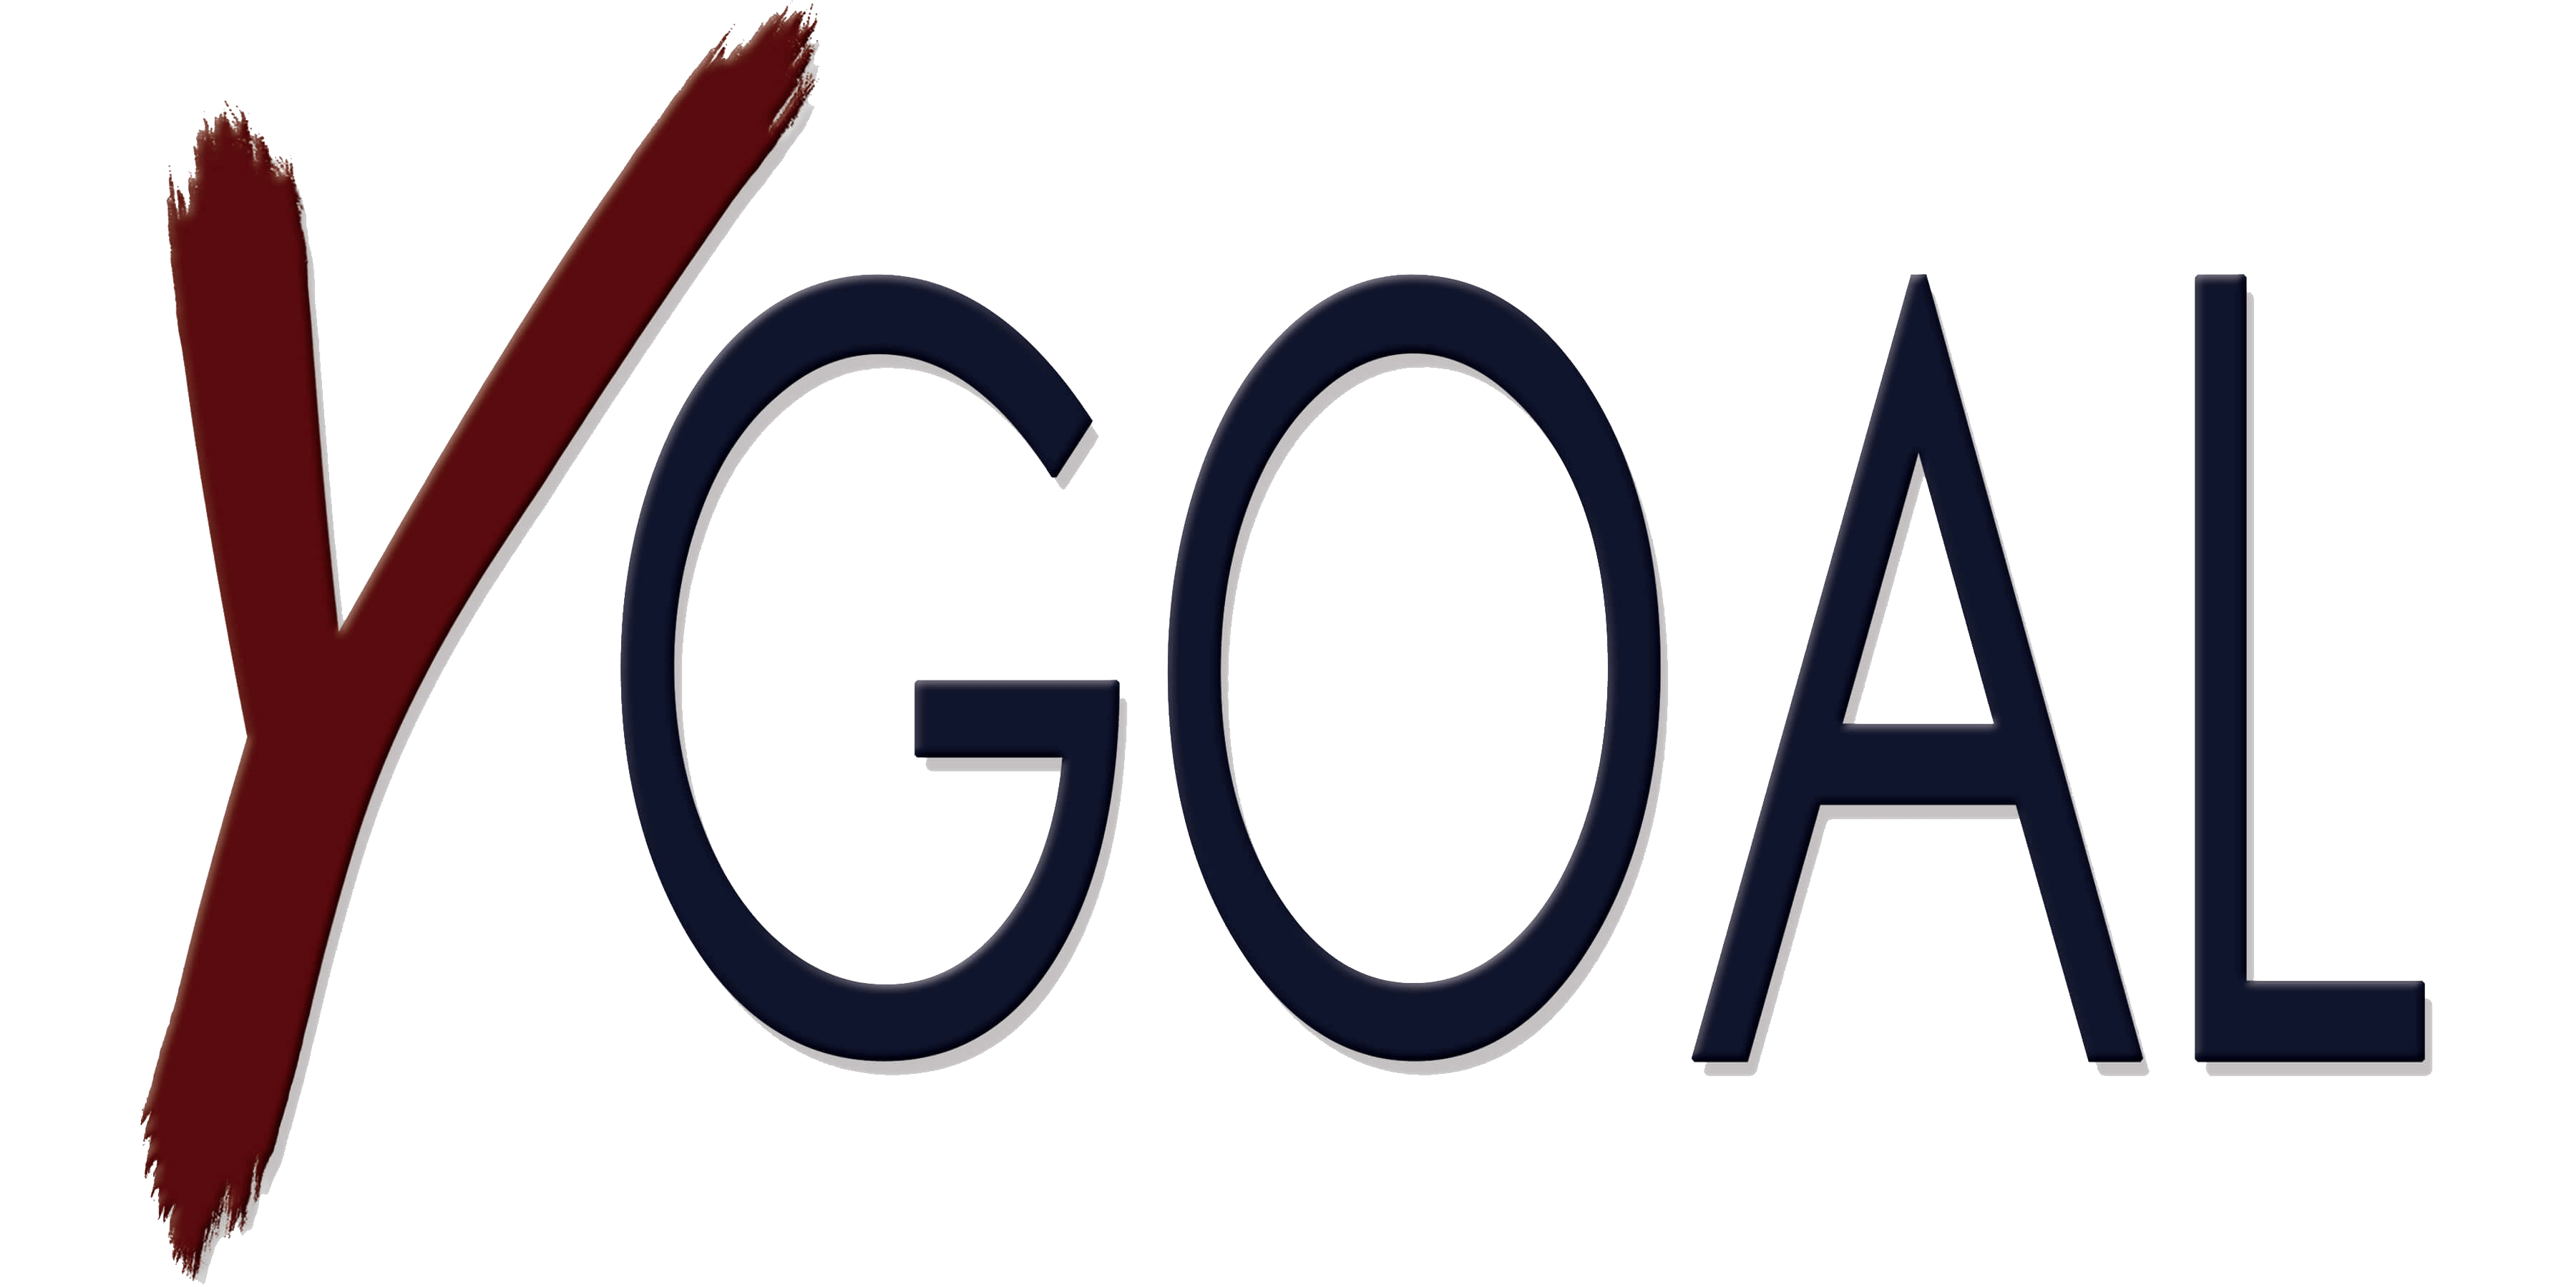 YGOAL logo